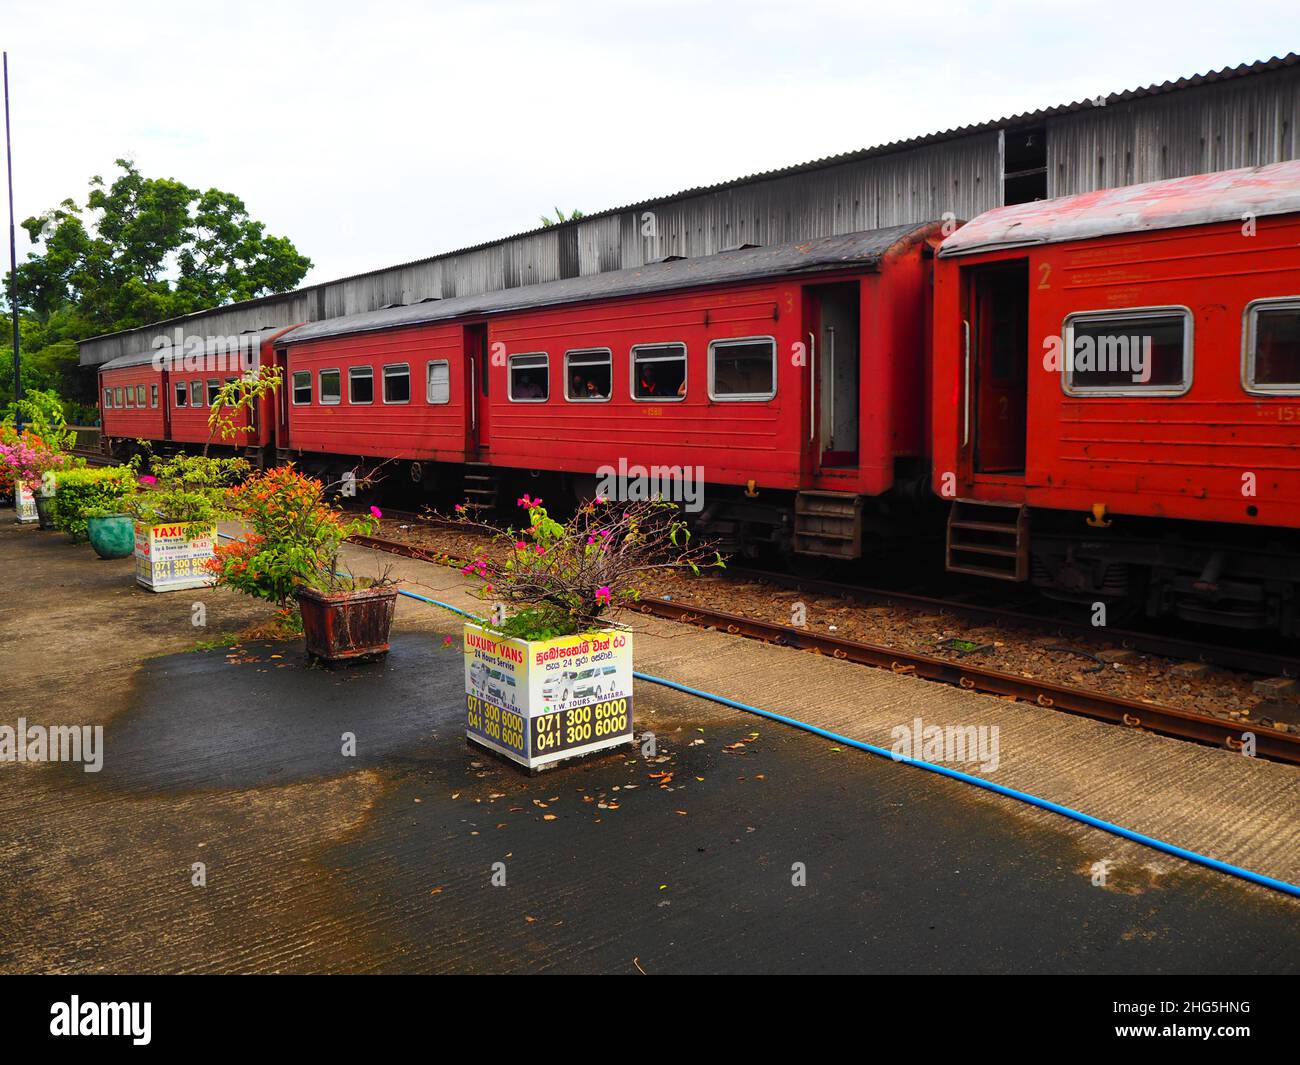 Viaggio in treno in Sri Lanka, Ceylon, Asia #Asia #aroundtheworld #SouthEastAsia #hinterland #Authentic #fernweh #slowtravel #Traintravel Foto Stock